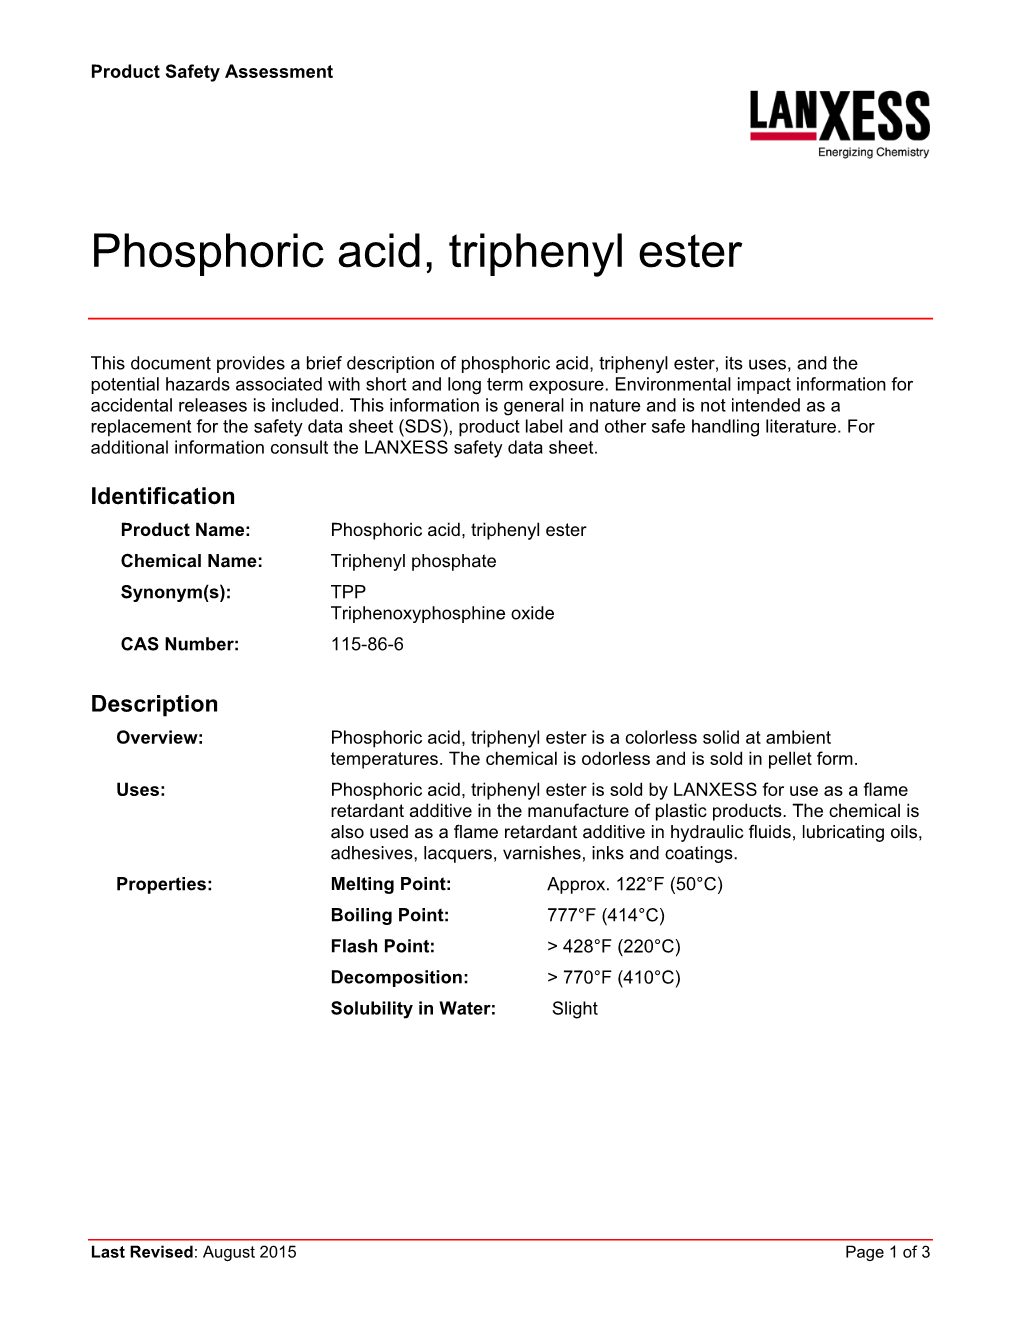 Phosphoric Acid, Triphenyl Ester